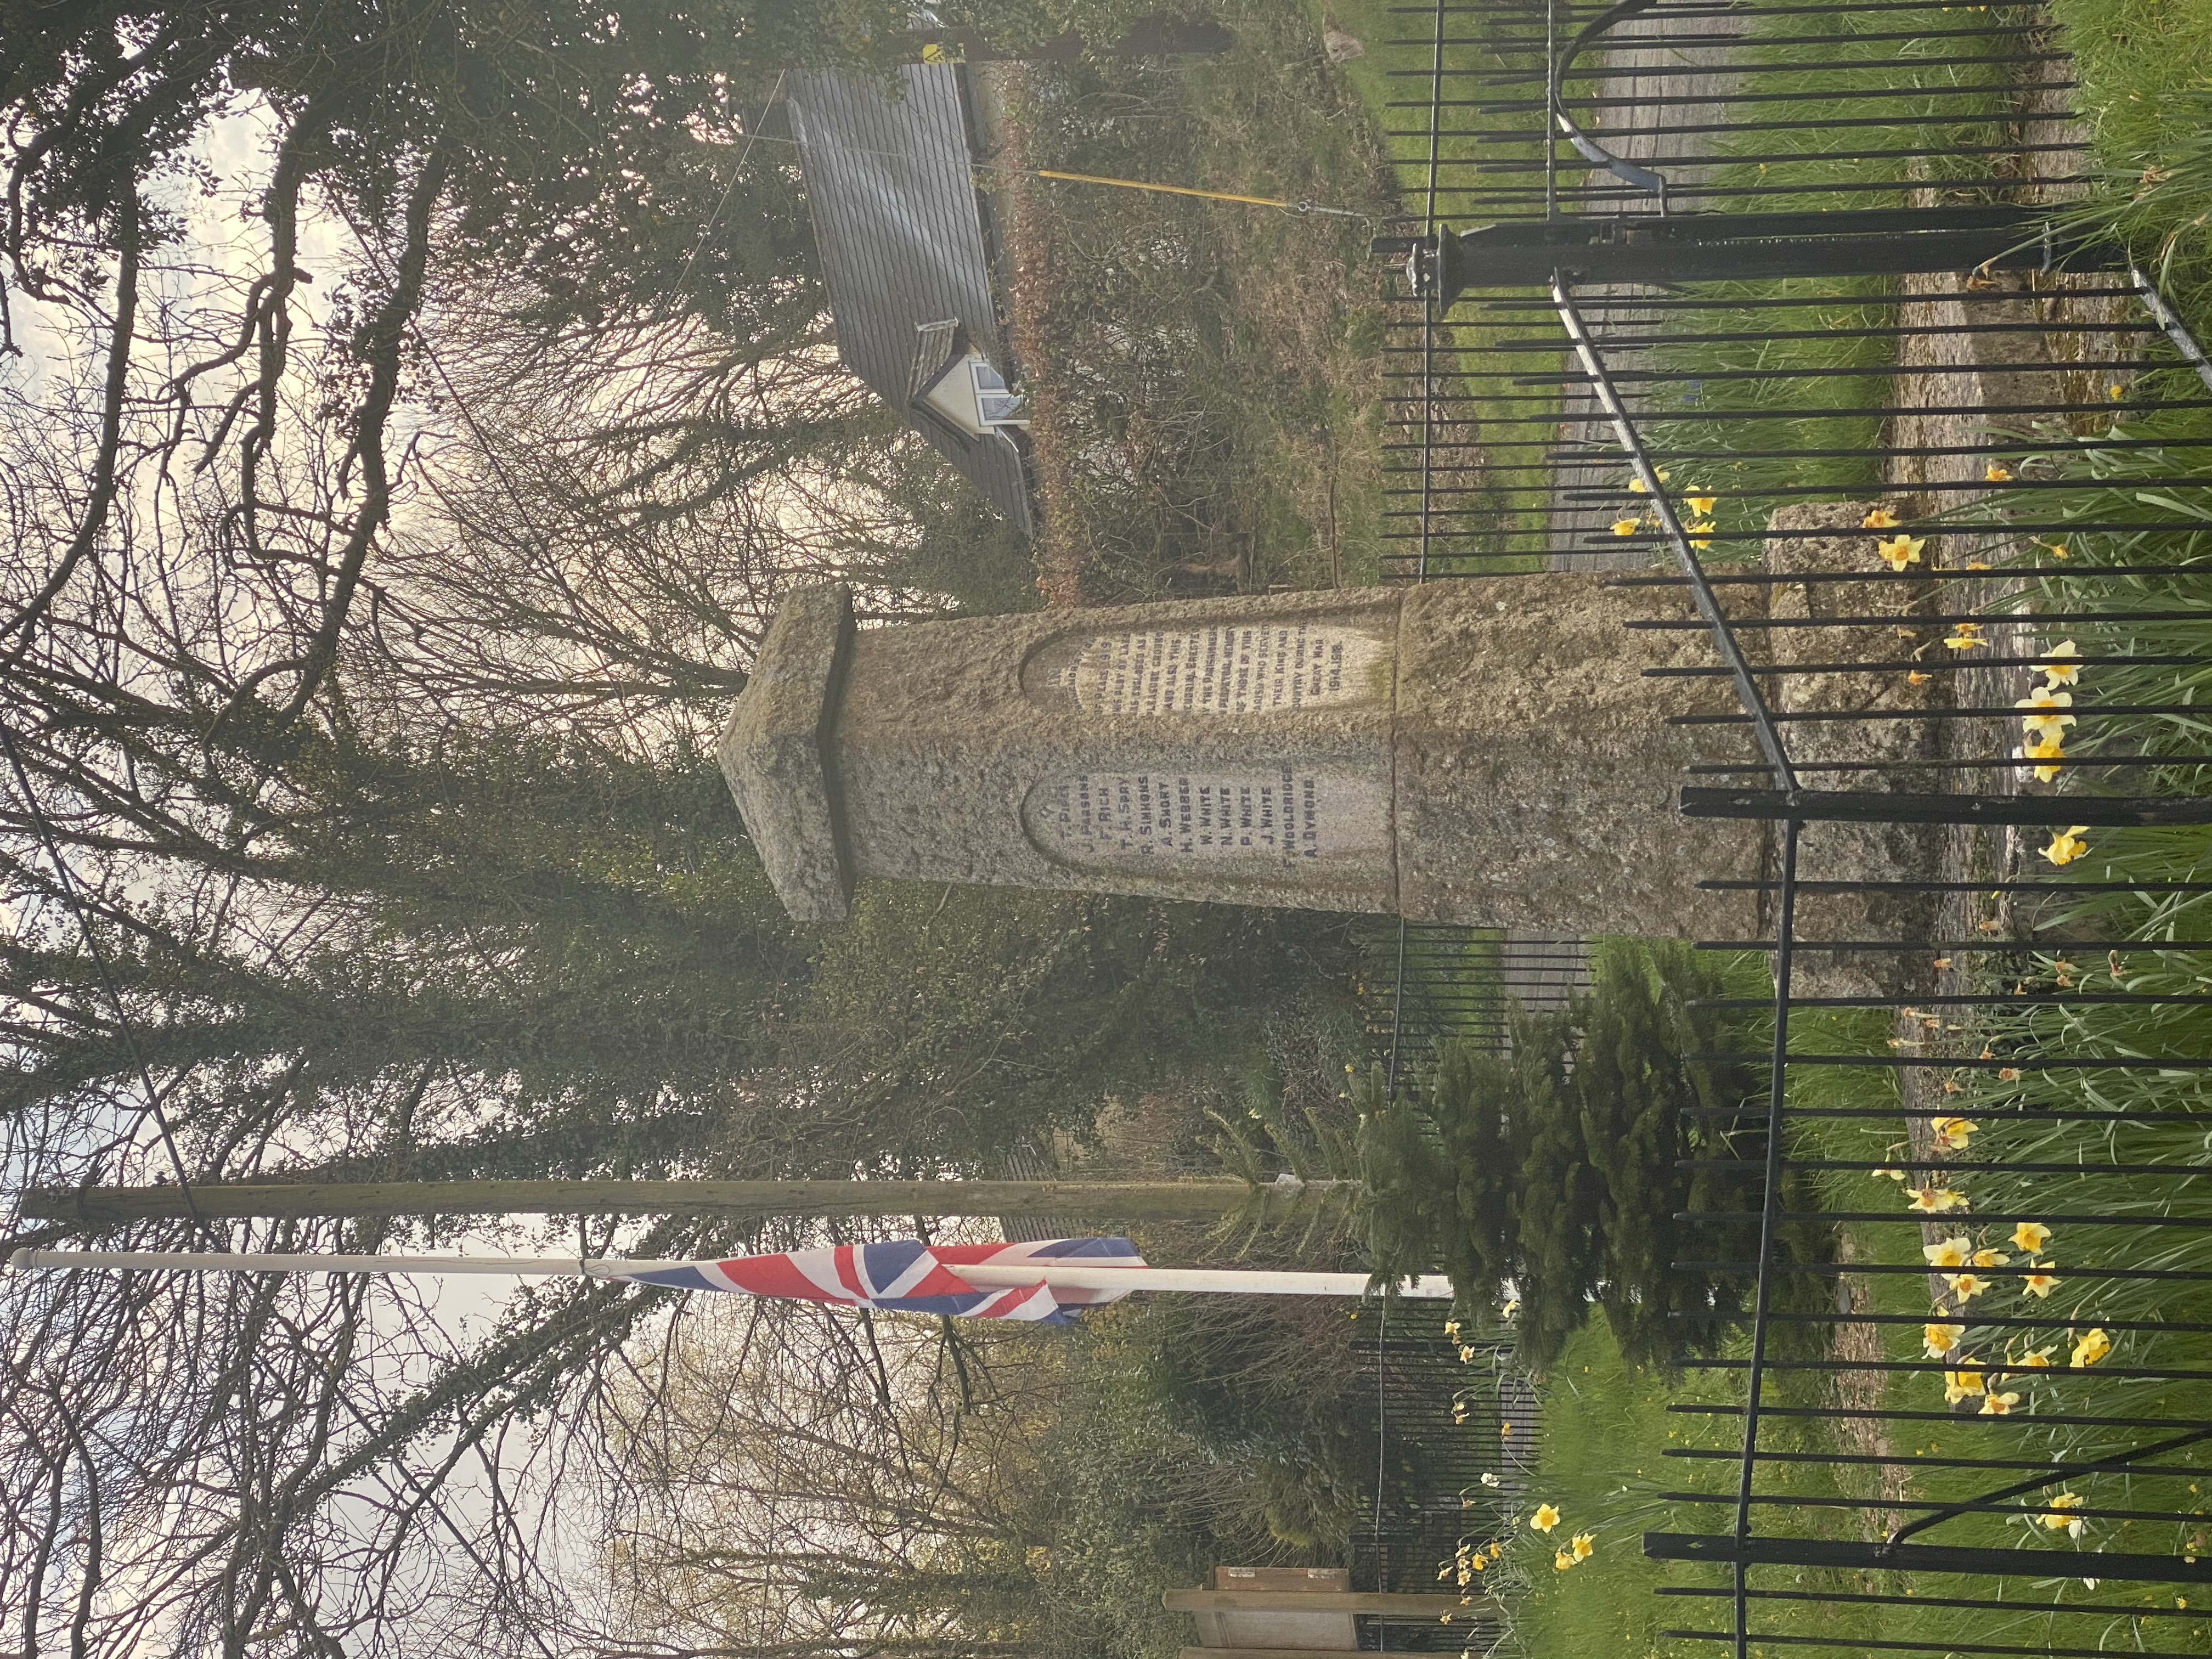 WW1 war memorial and union flag